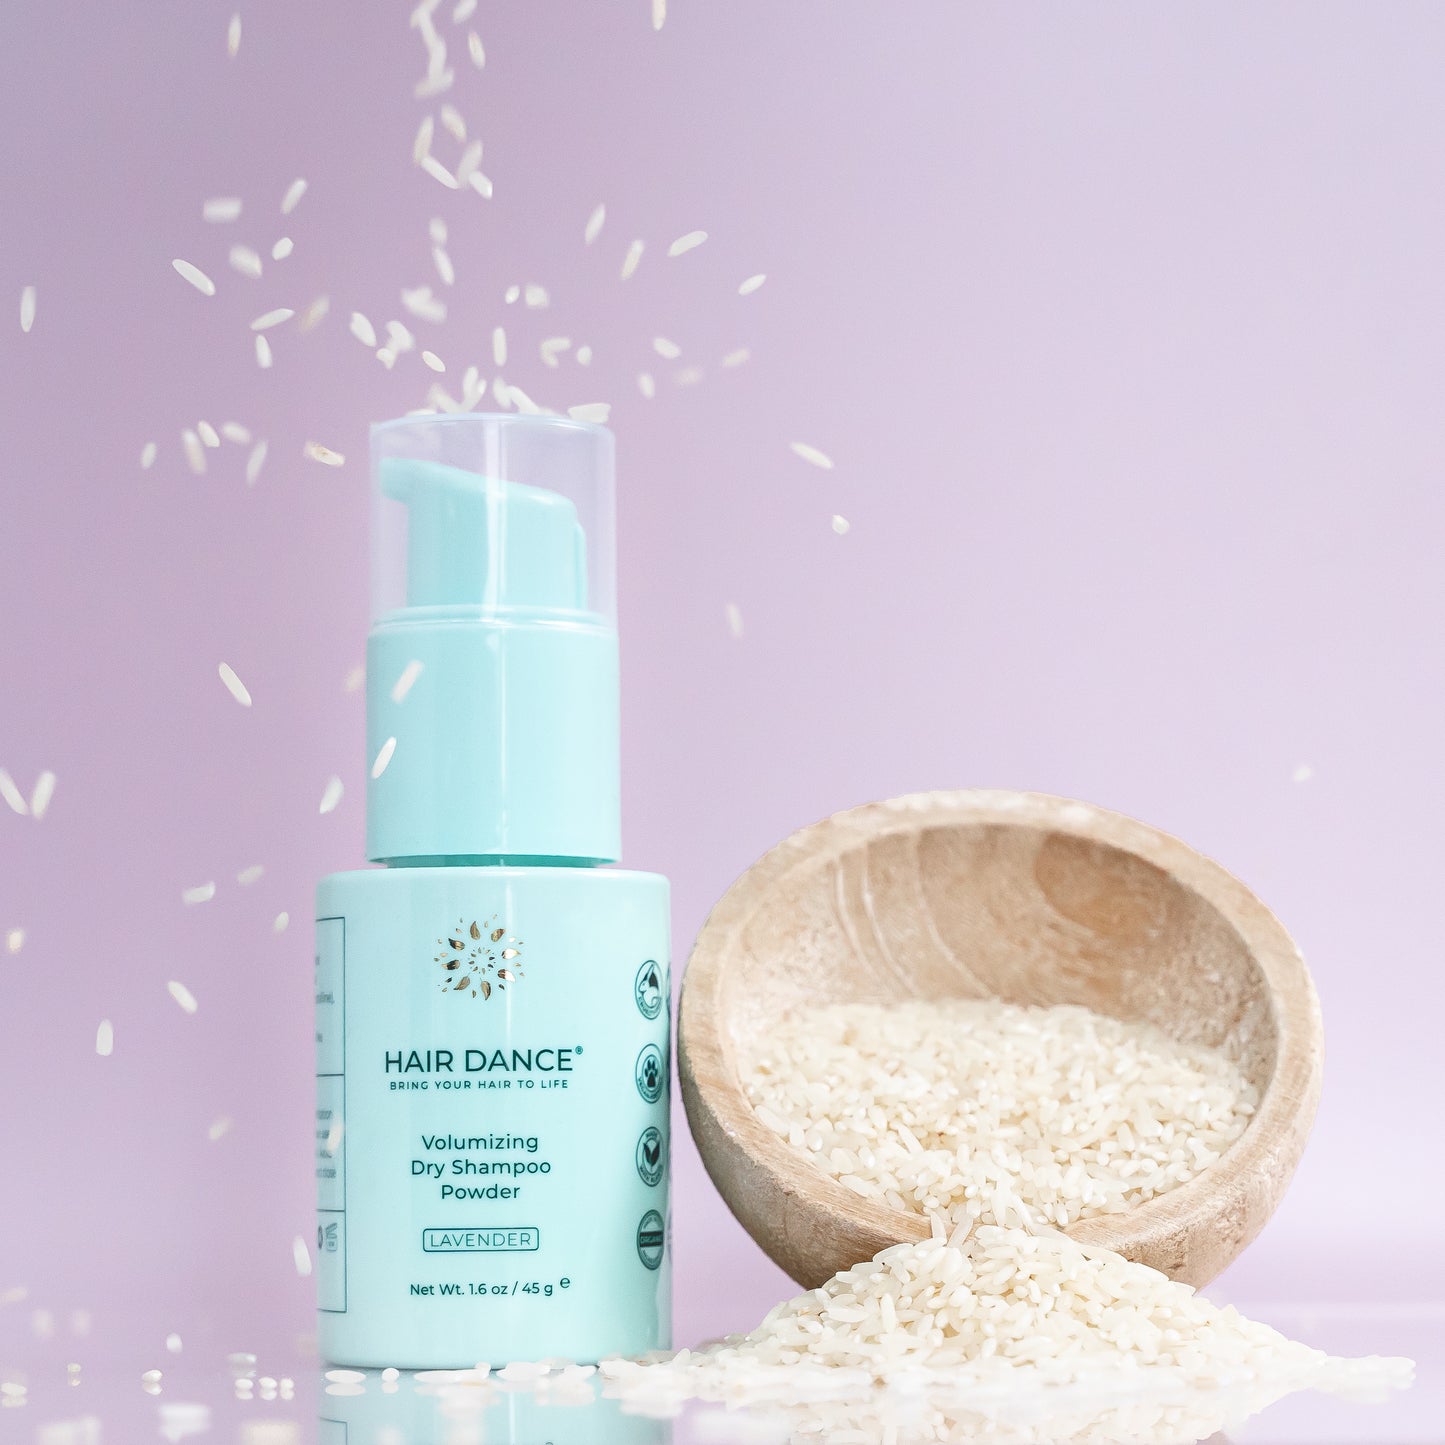 (New Release) Dry Shampoo Powder | Non-Aerosol, Organic Ingredients, Refillable Bottle, Volumizing Spray Applicator in Lavender - 1.6 oz